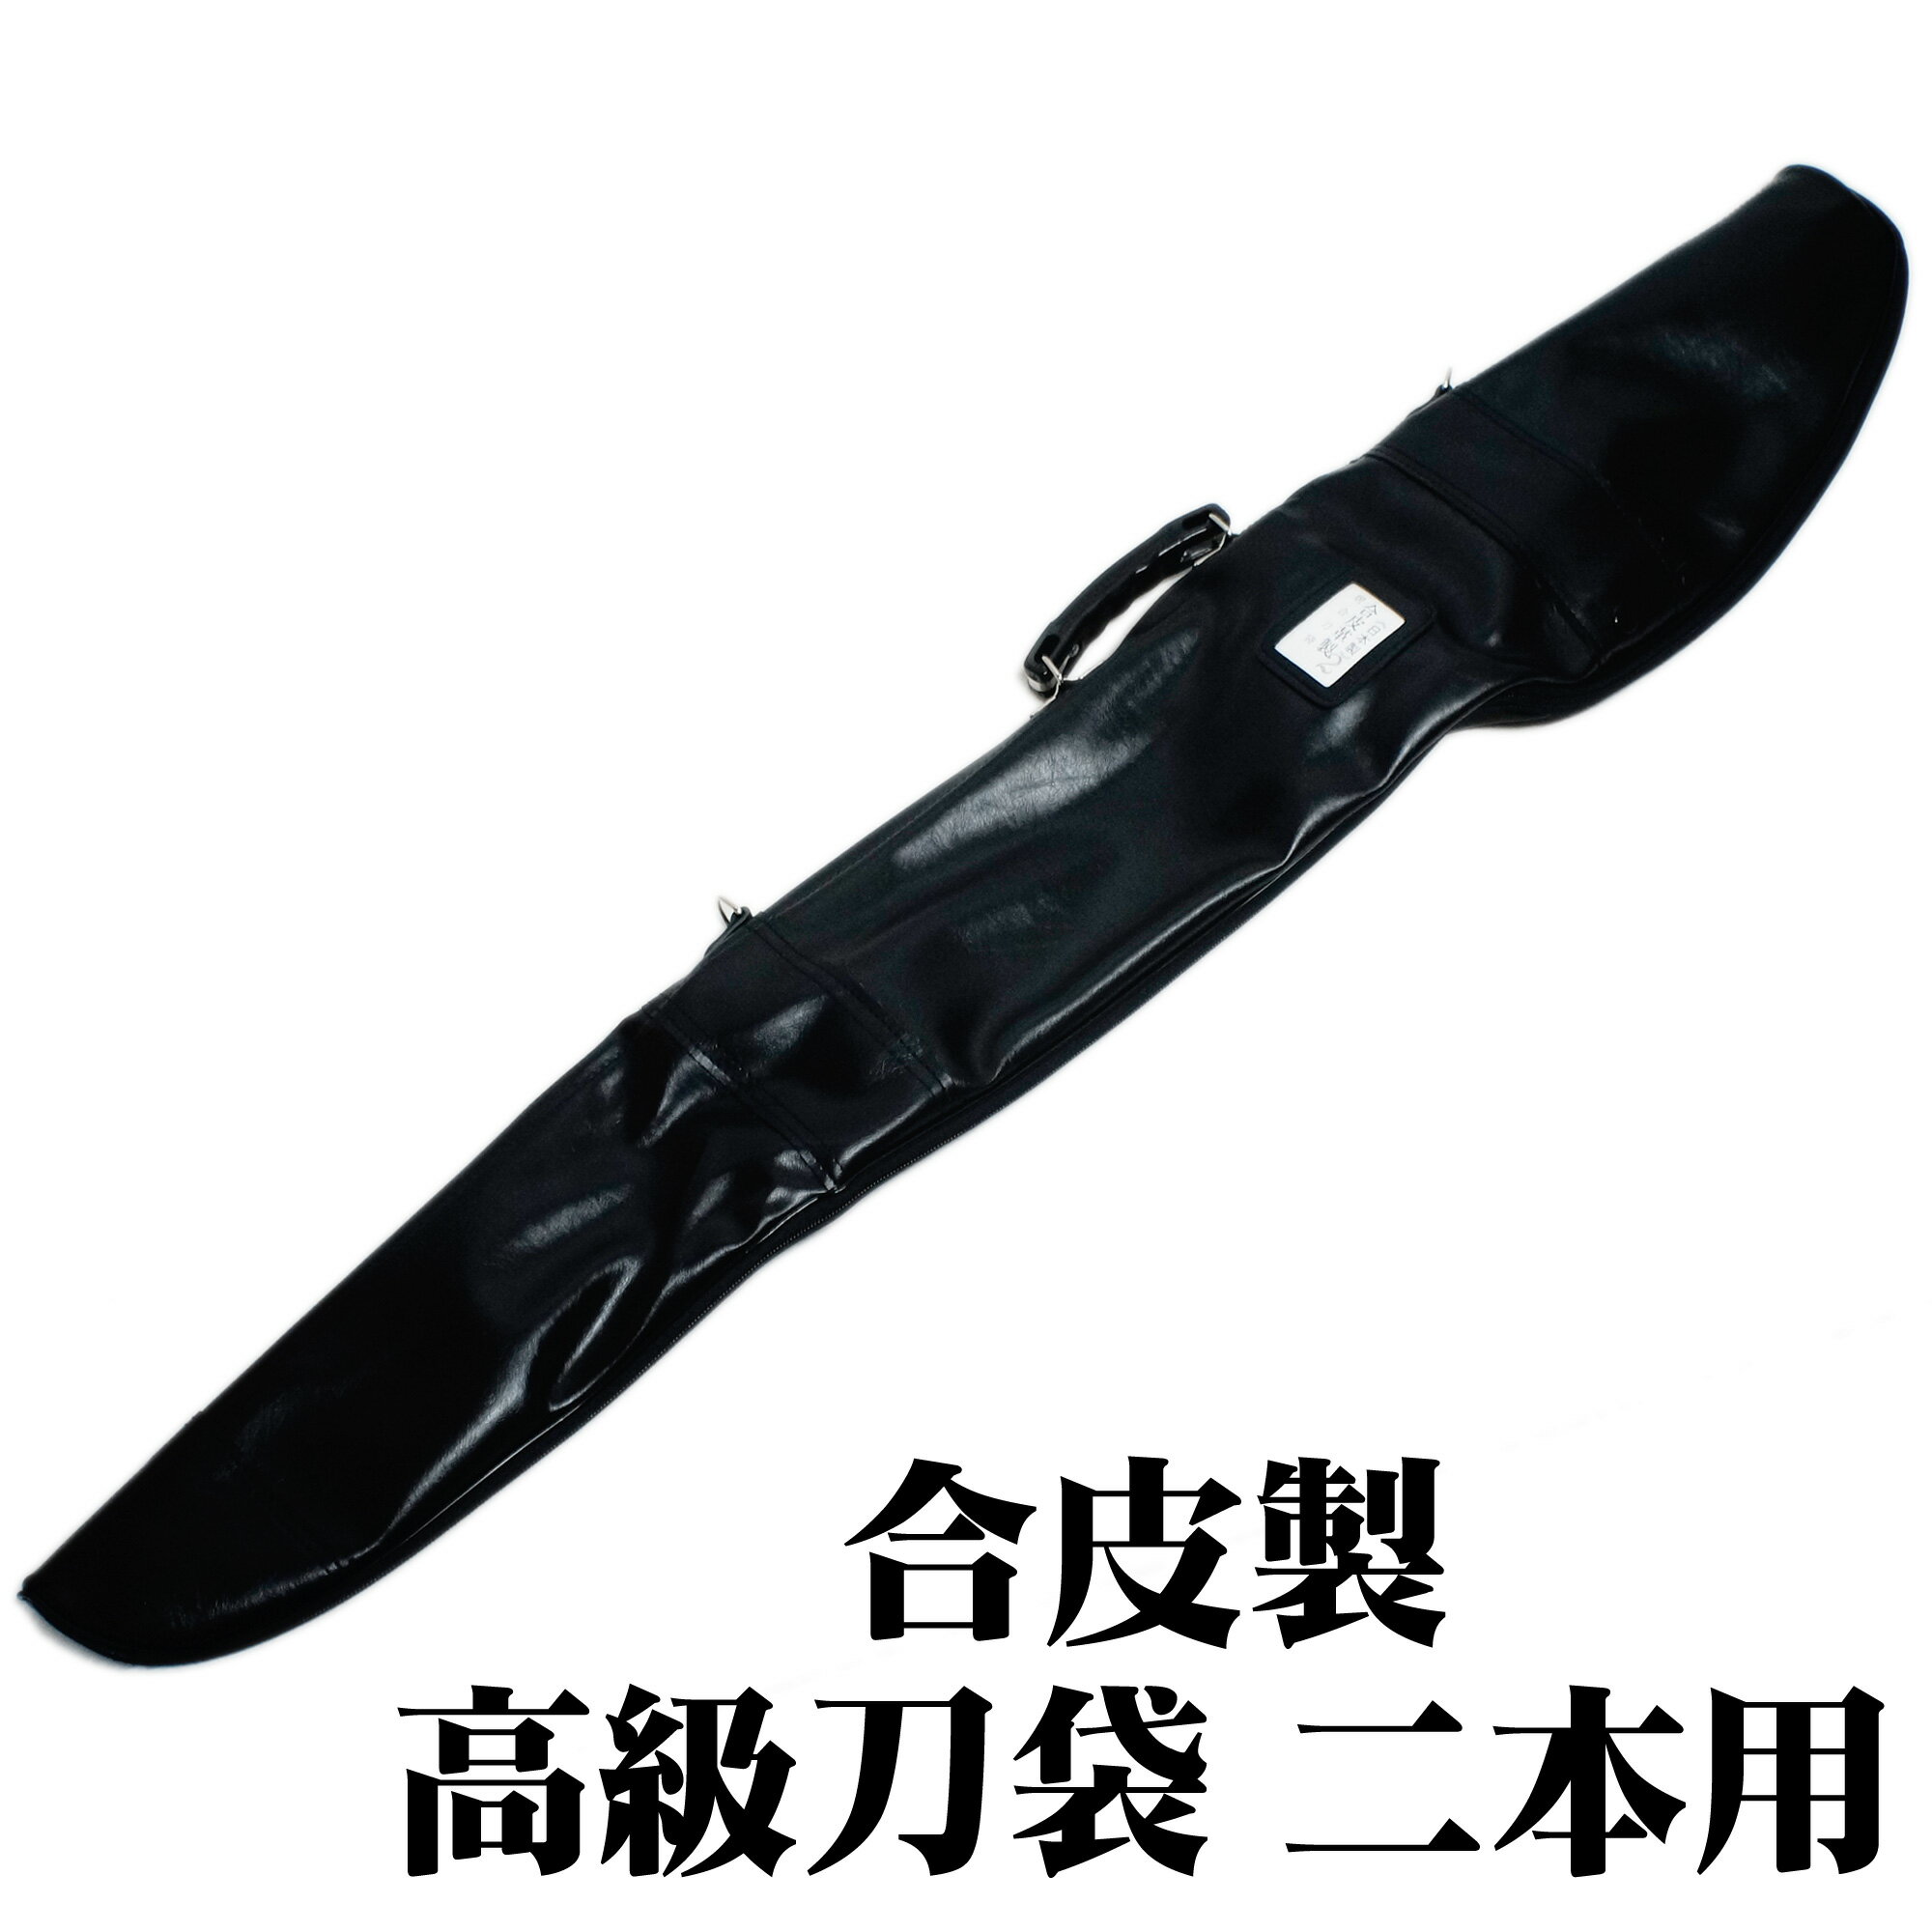 匠家 高級刀袋 合皮製 二本用 ZK-103 - 模造刀 武具入れ 持ち運びに 【送料無料】